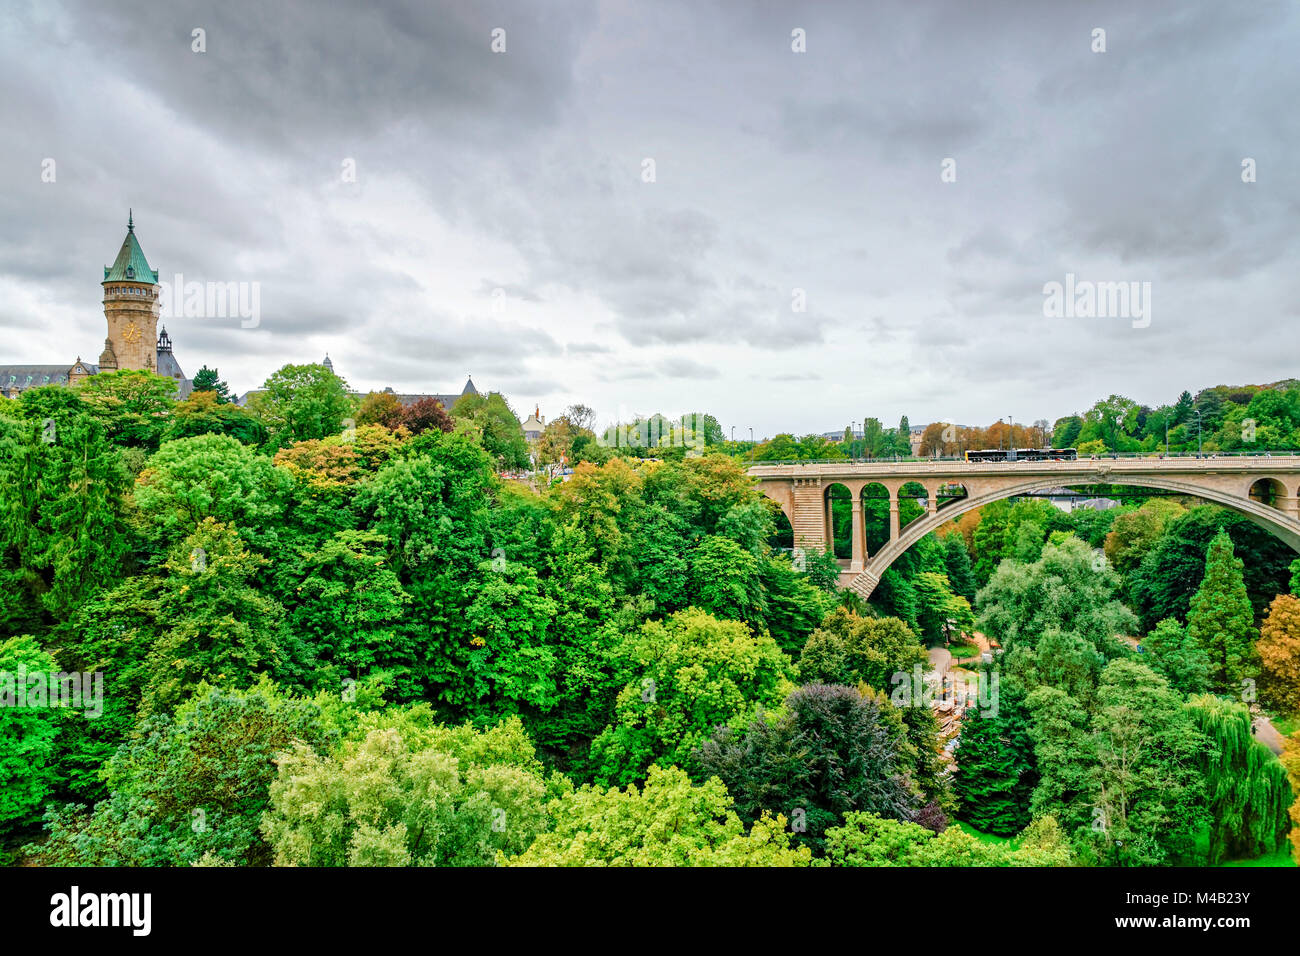 Luxembourg,Adolphe bridge,tower of Luxemburgish Spuerkeess,Luxembourg City Stock Photo